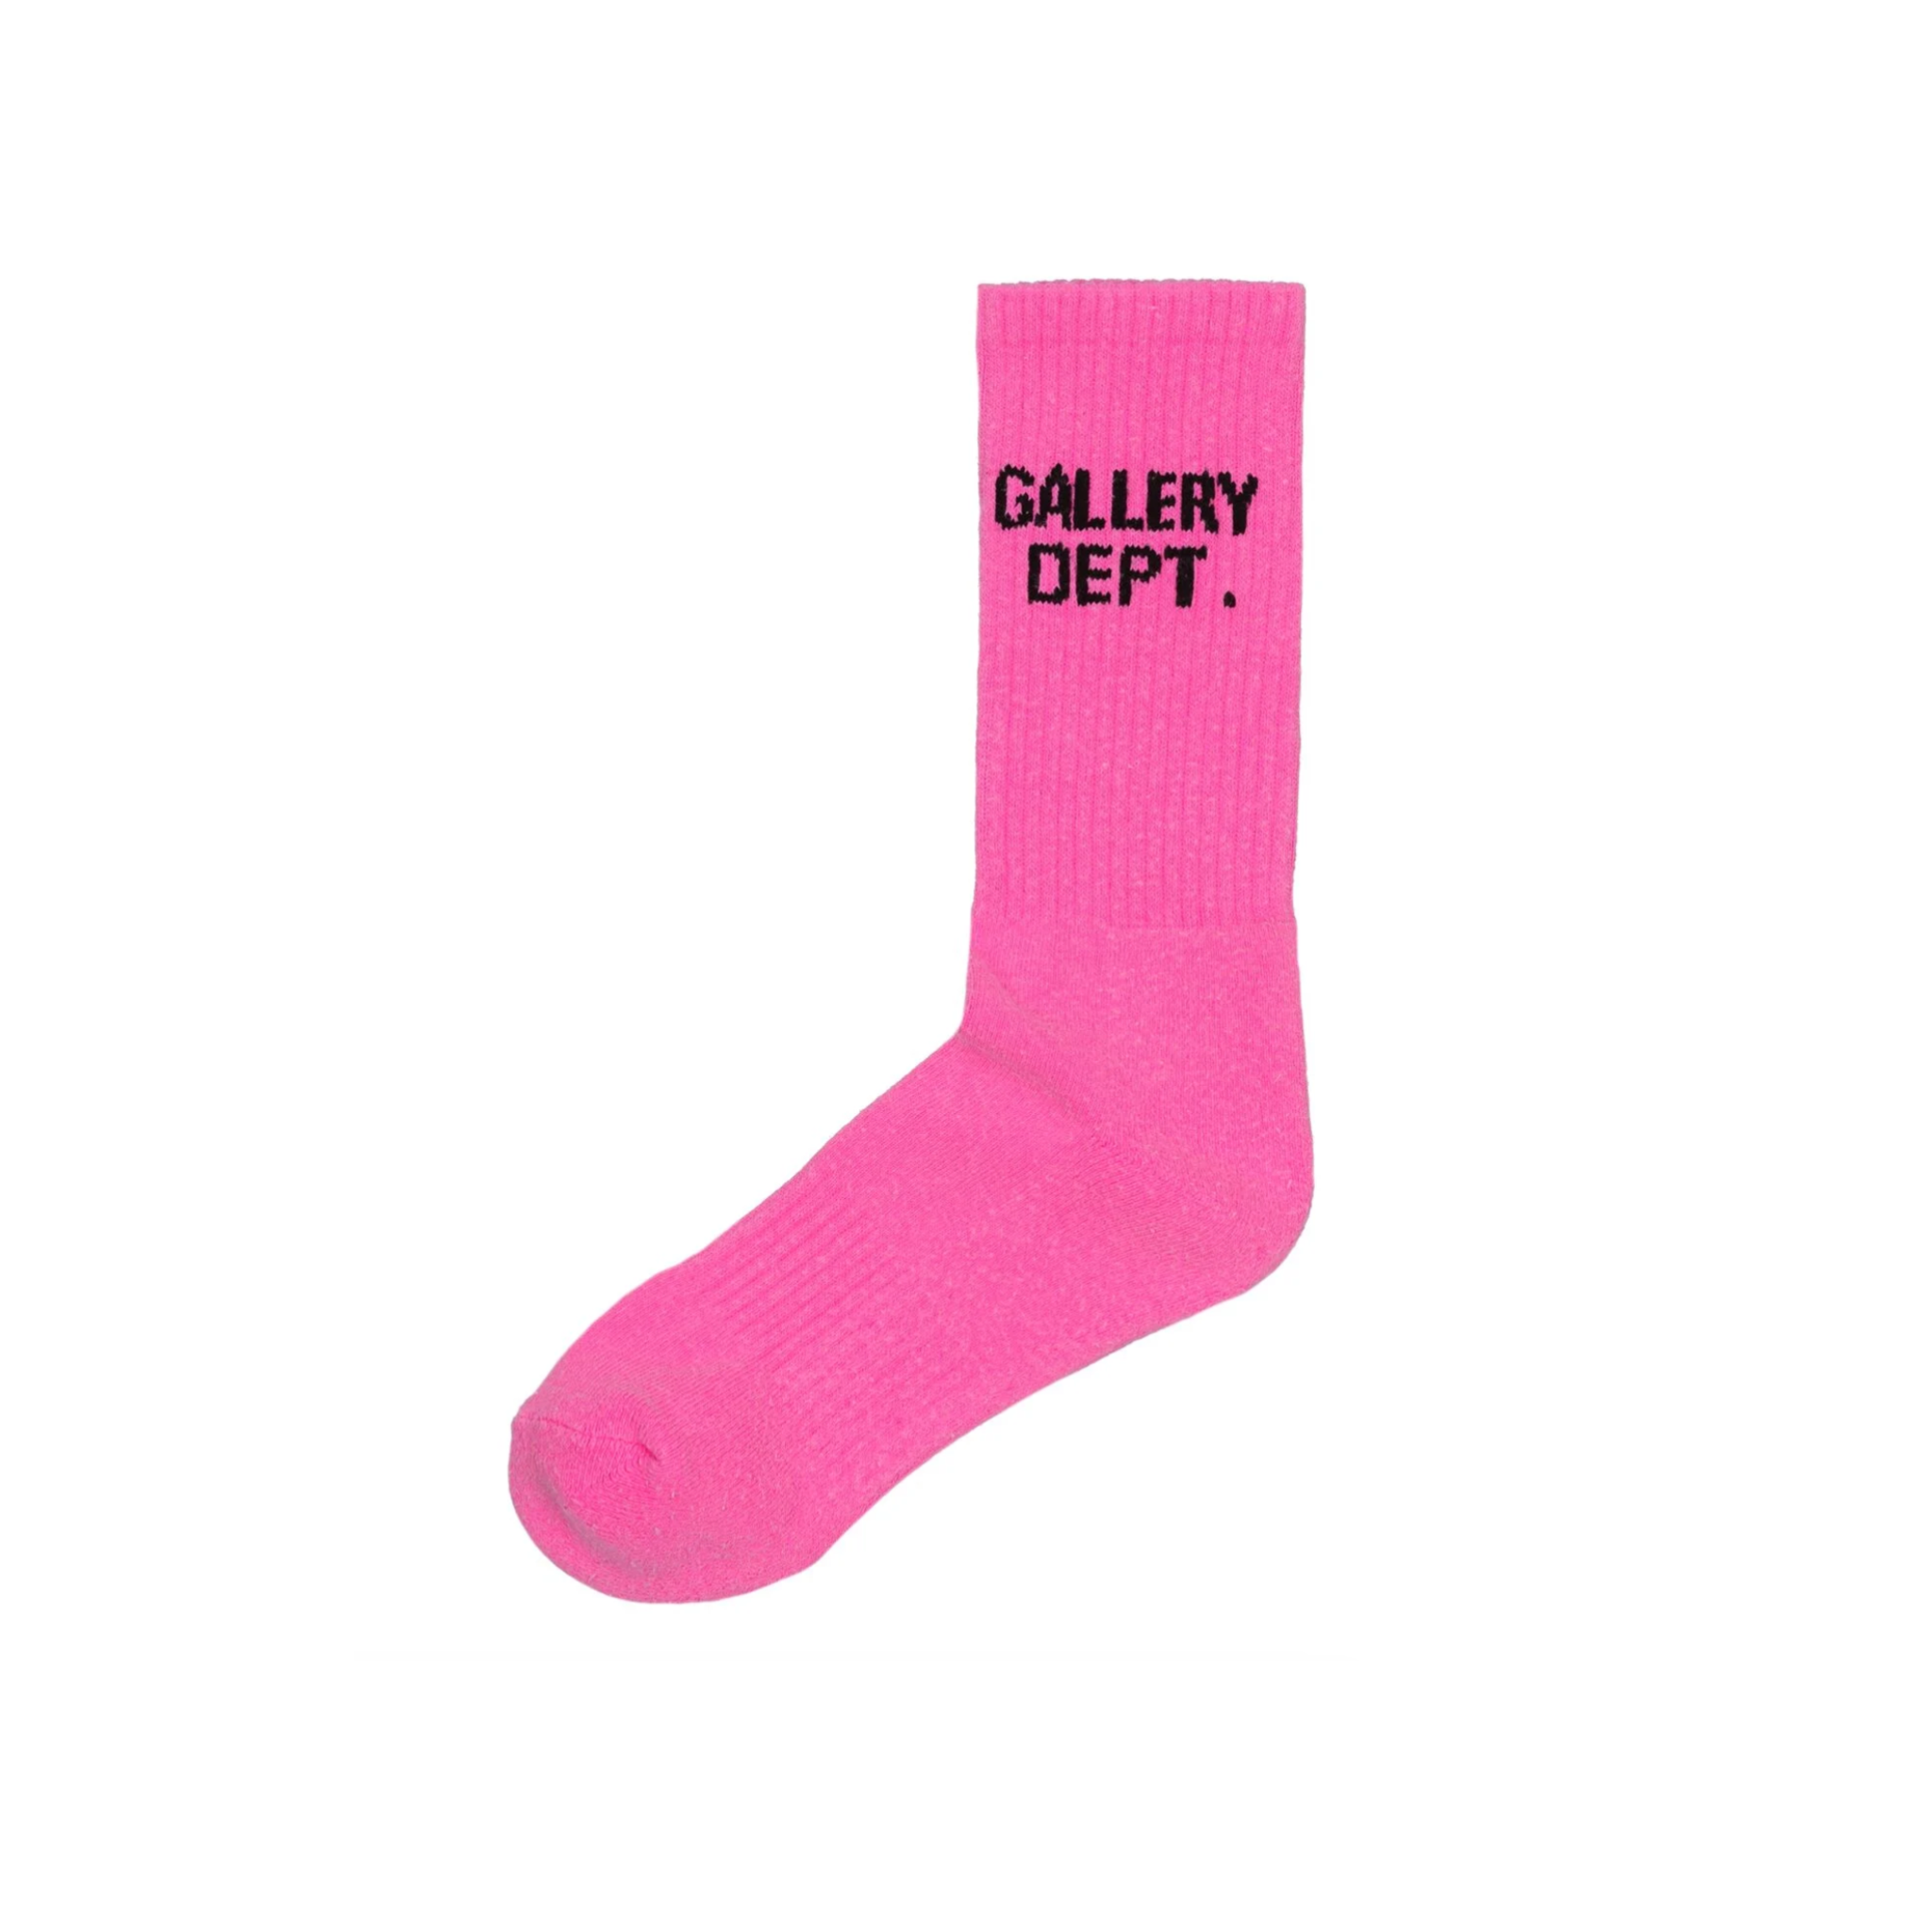 Gallery Dept. Cotton Blend Socks logo